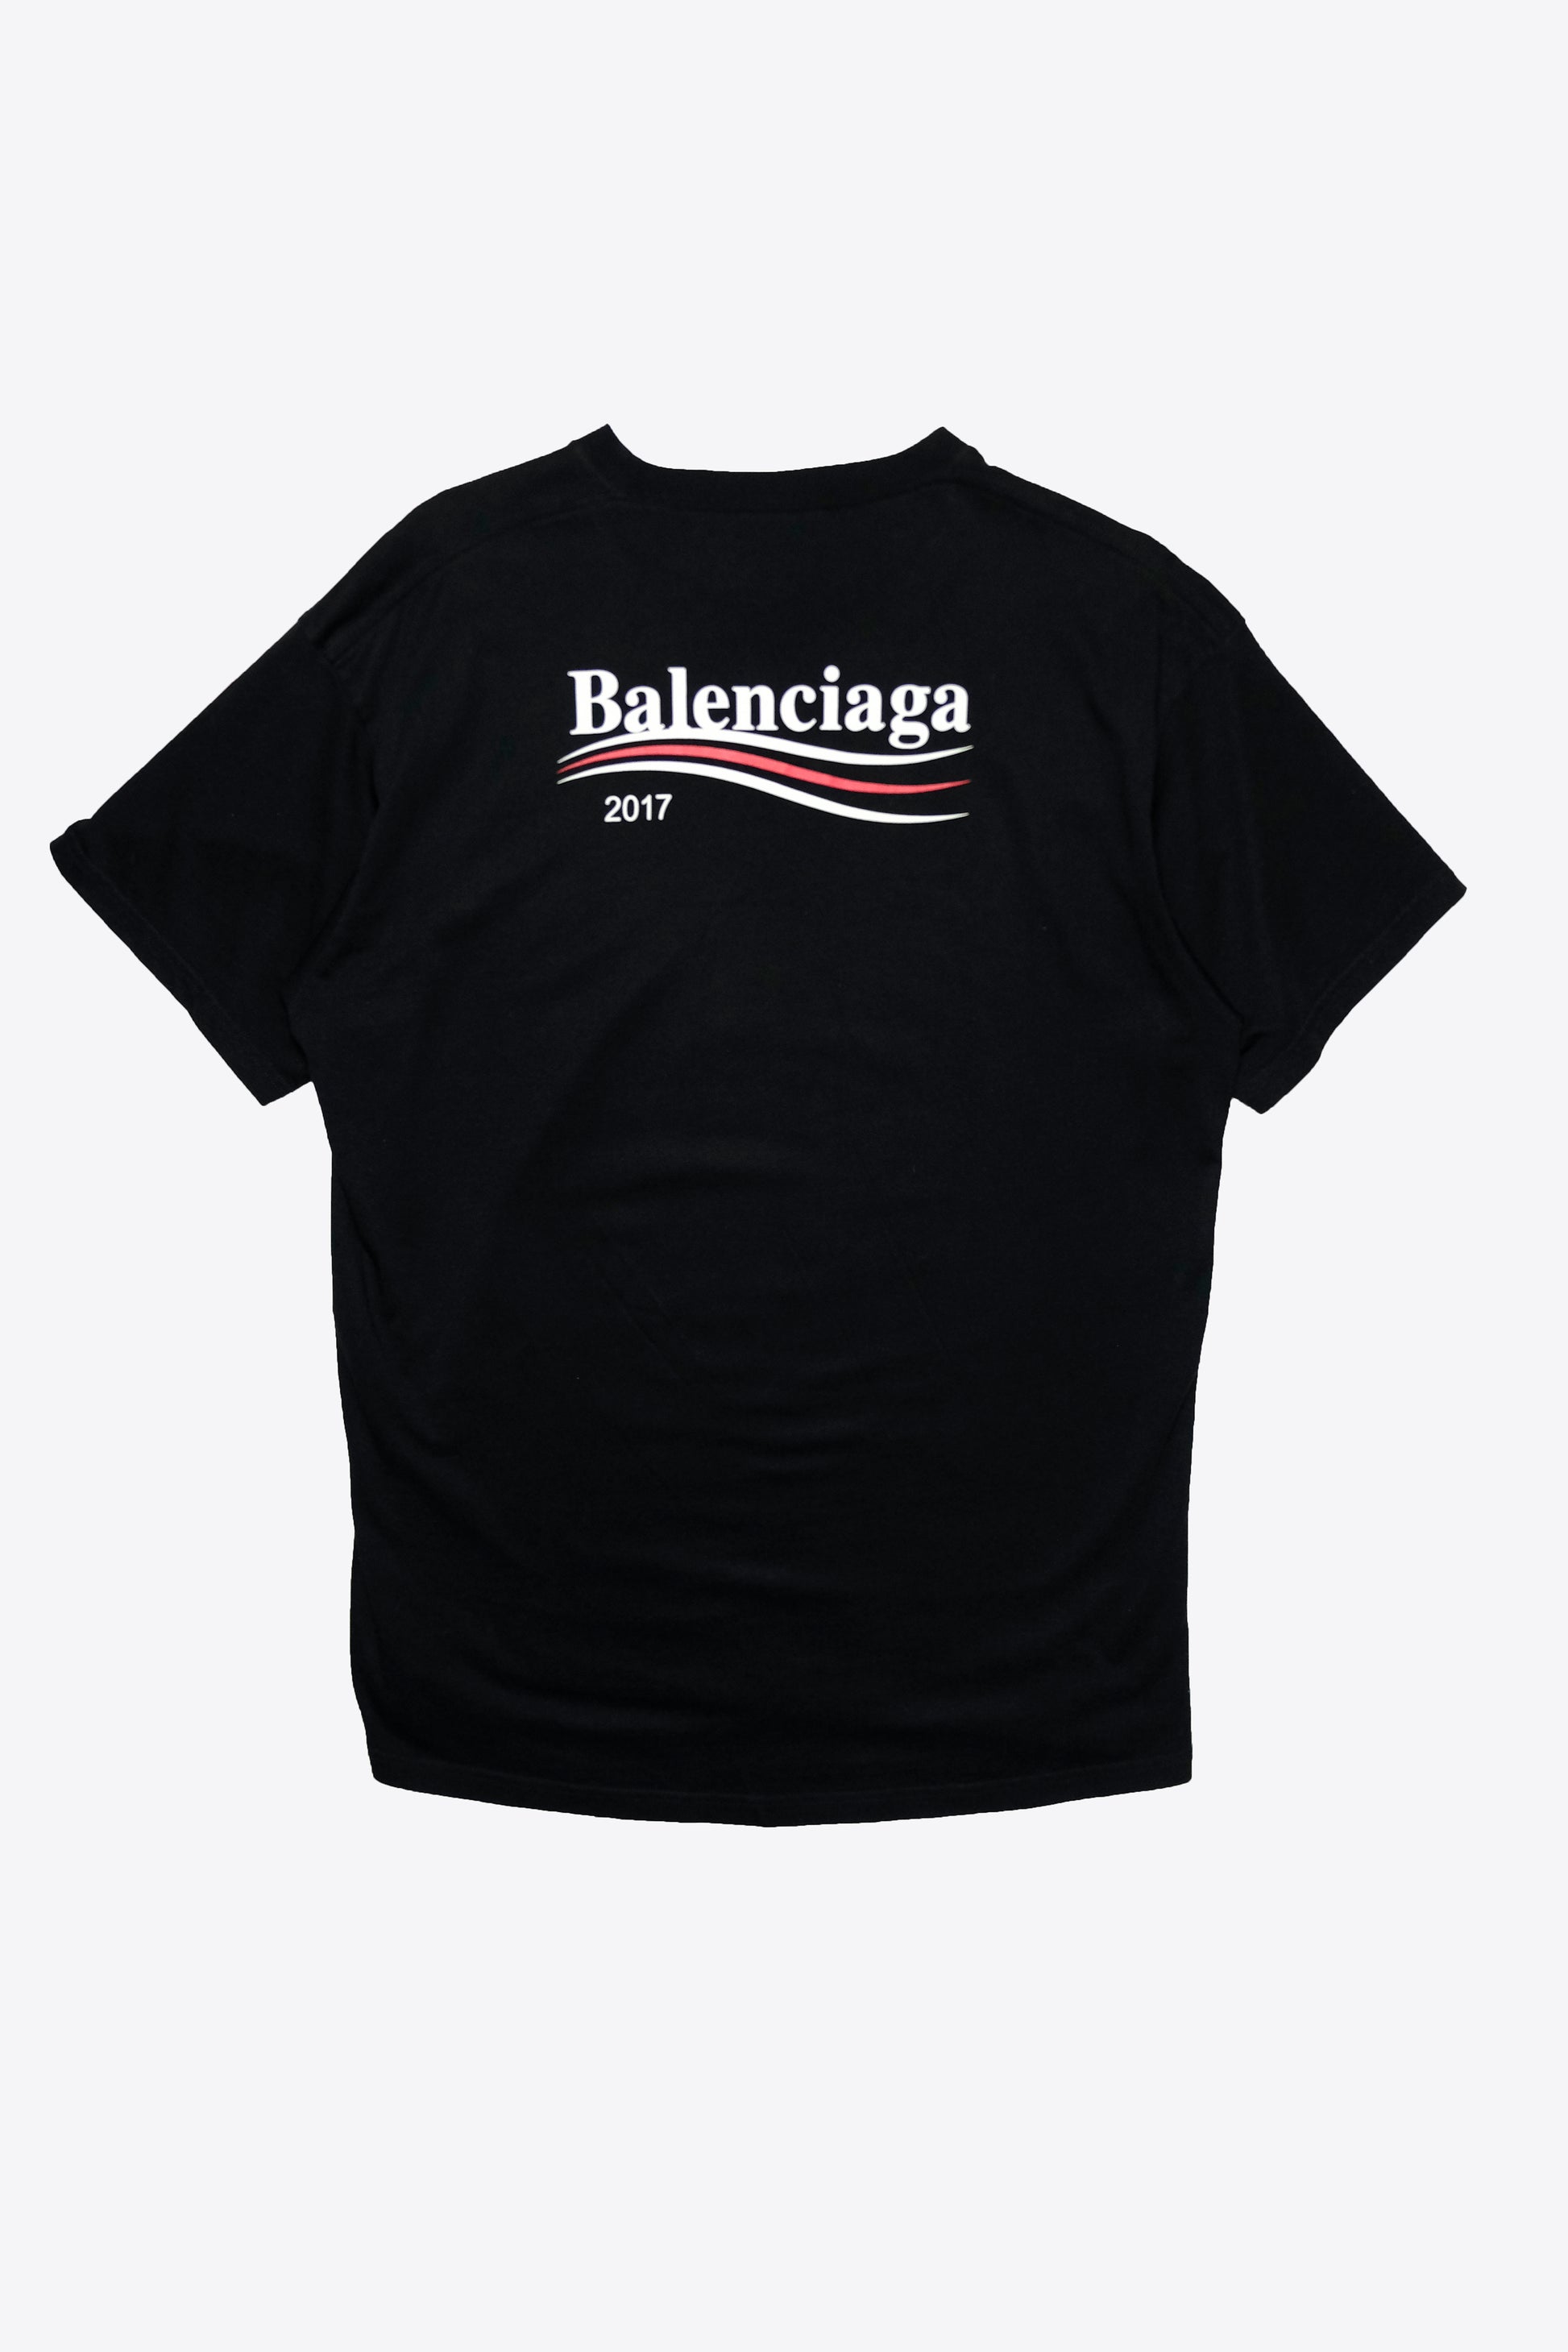 Balenciaga - 2017 Political Campaign Tee Shirt, Size S – Archive